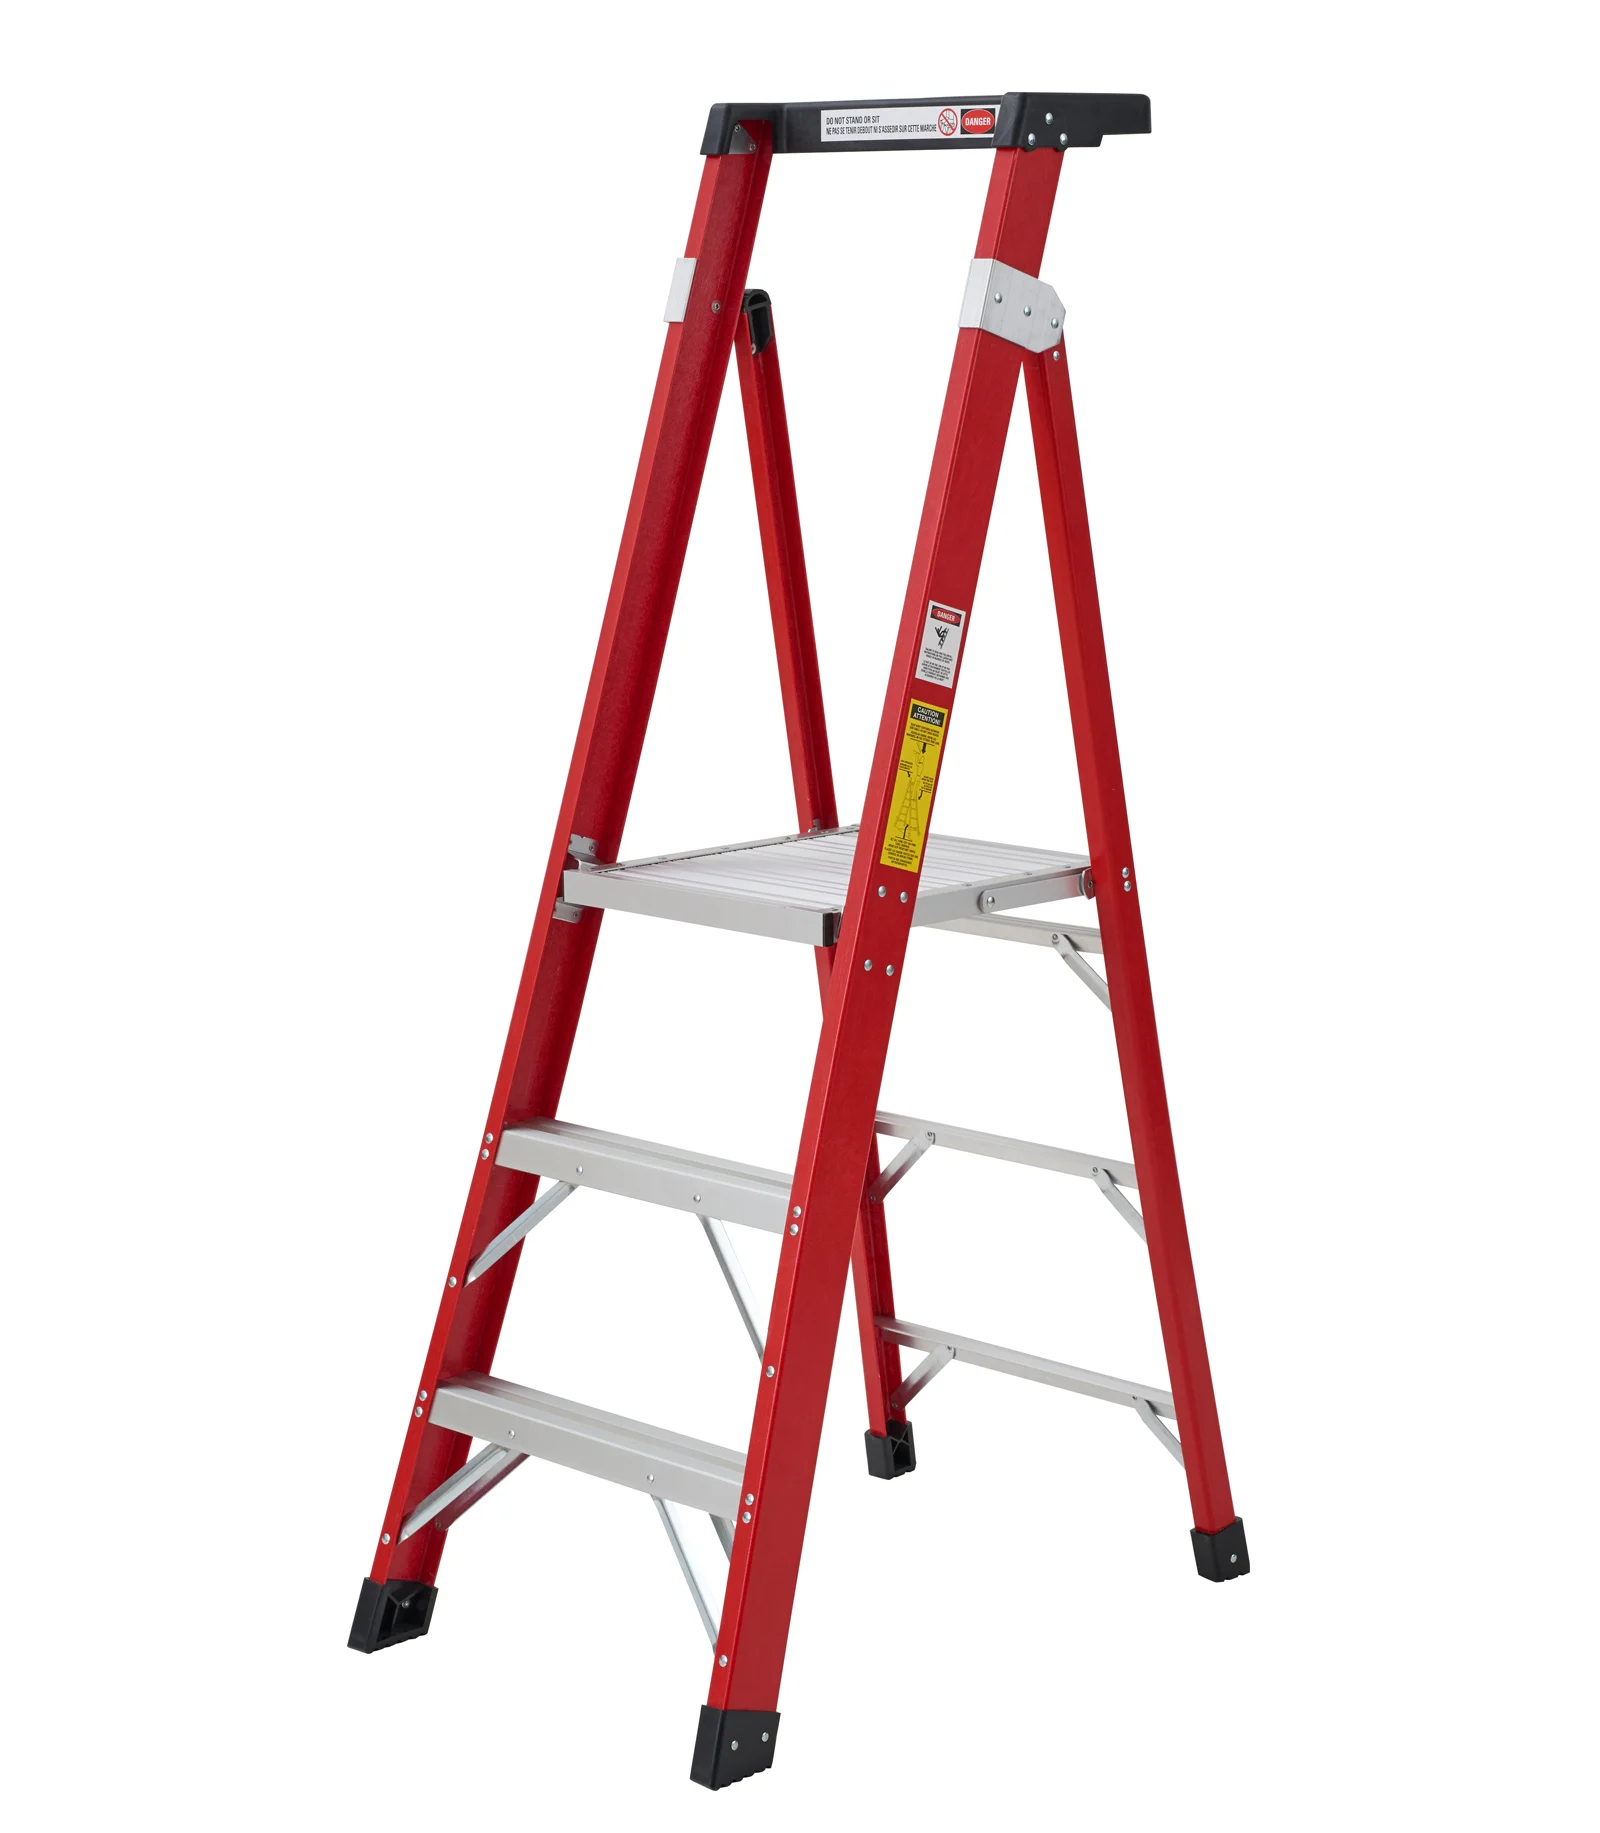 A platform ladder